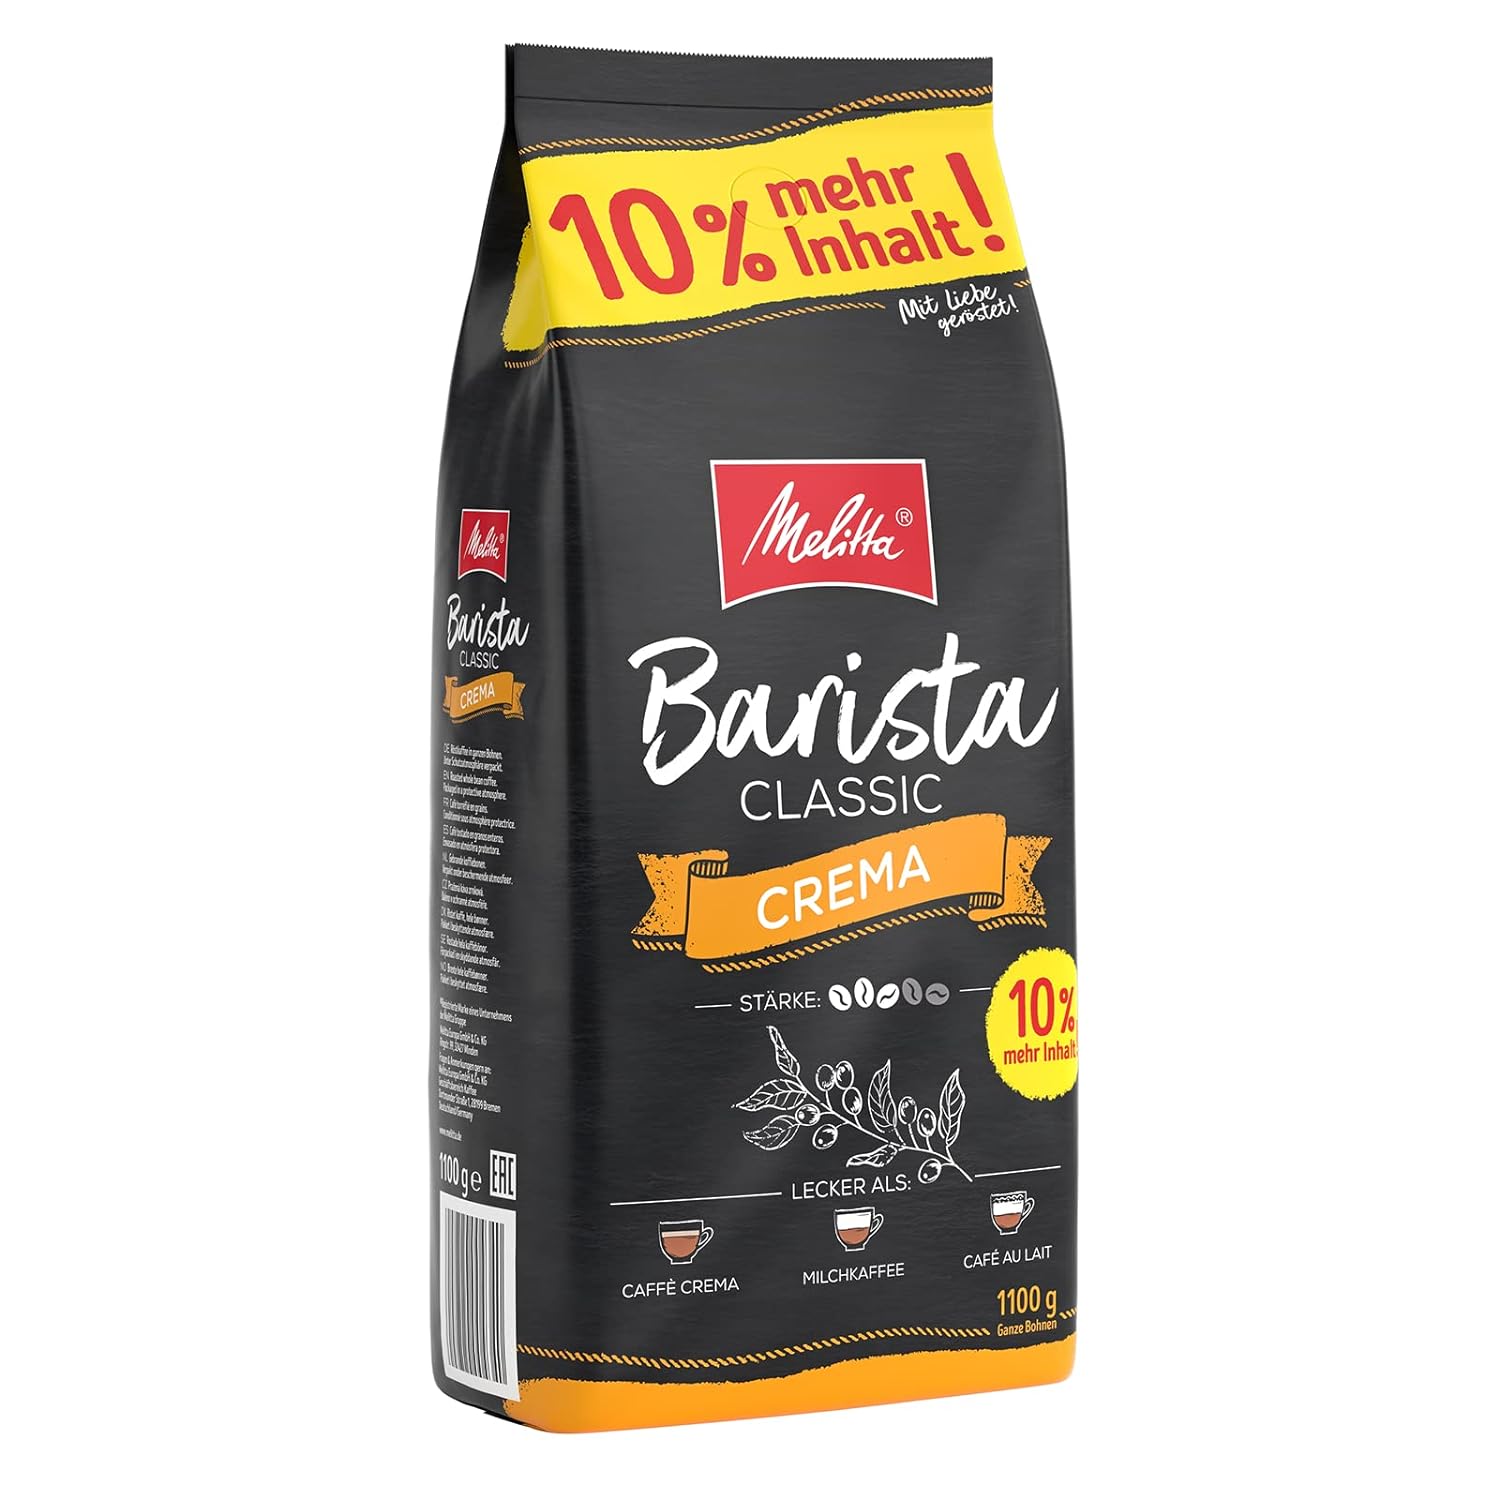 Melitta Barista Classic Crema, Whole Coffee Beans 1.1 kg, Unground, Coffee Beans for Fully Automatic Coffee Machine, Medium Roast, Strength 3